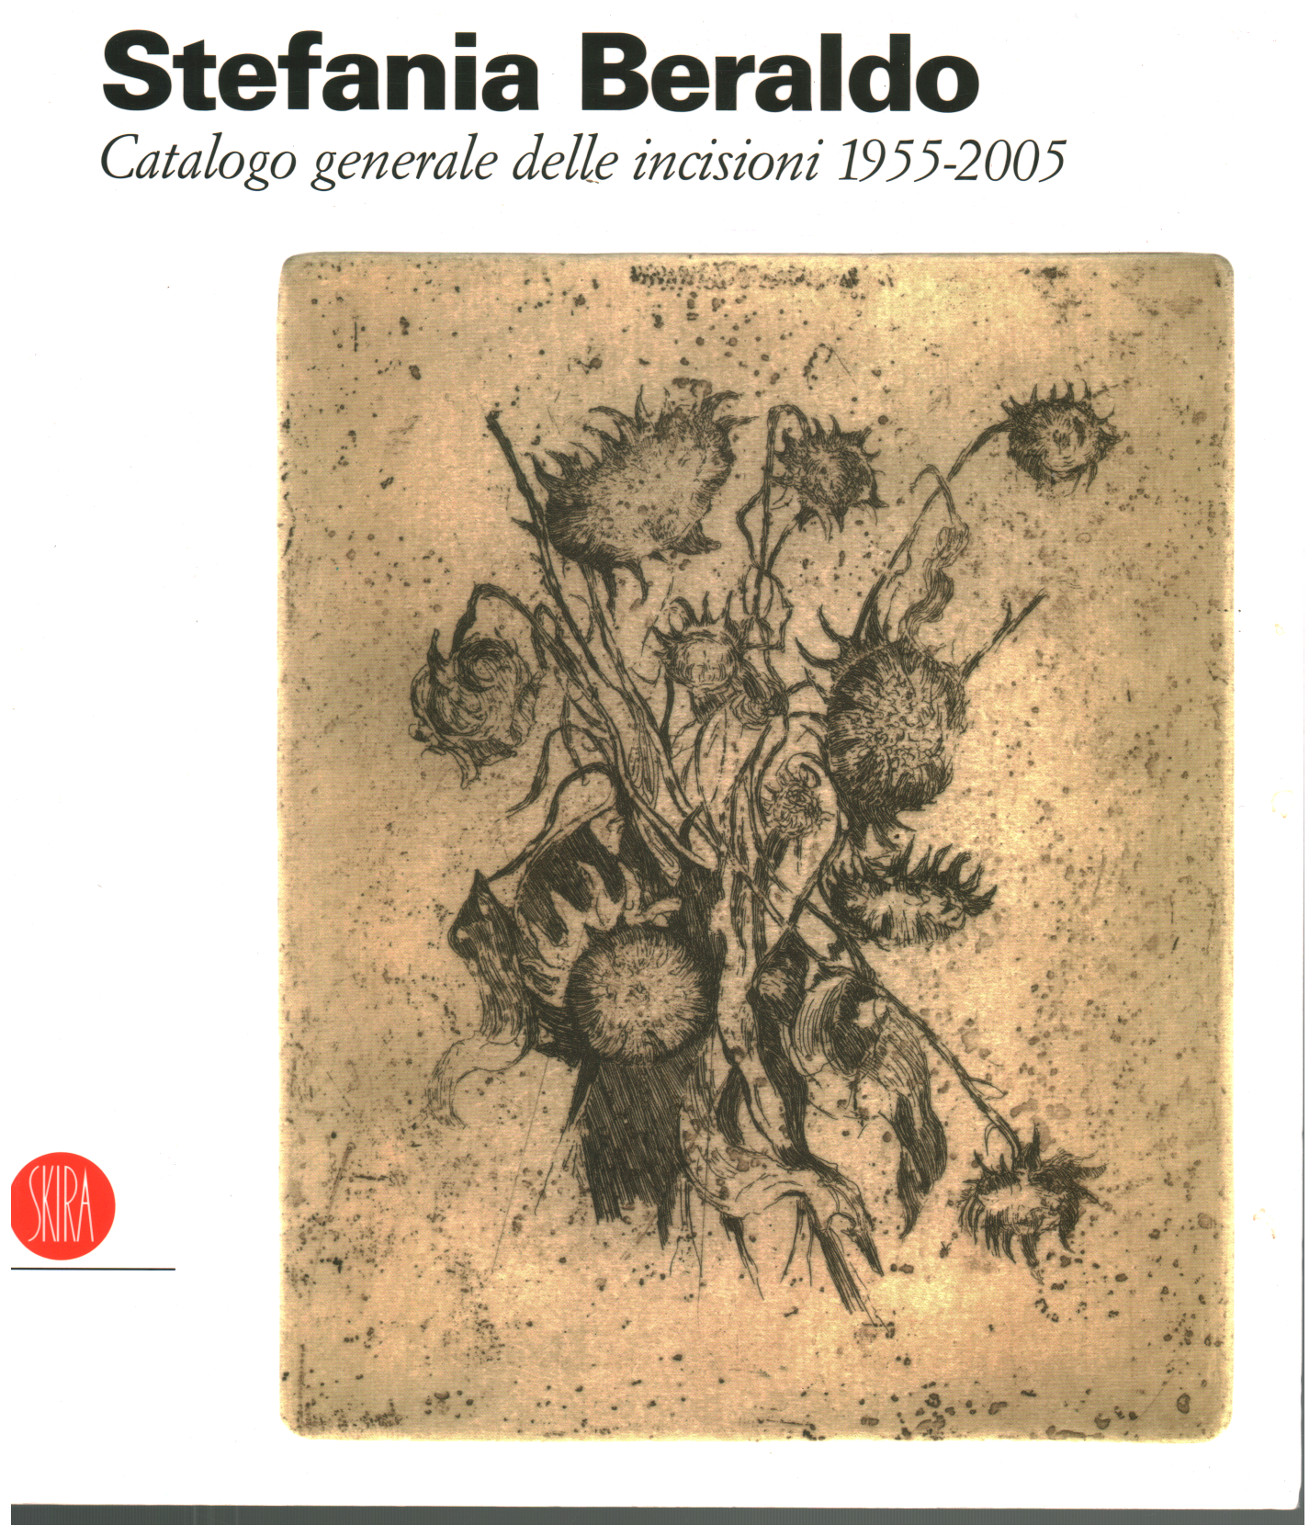 Stefania Beraldo. General catalogue of the incision, s.a.